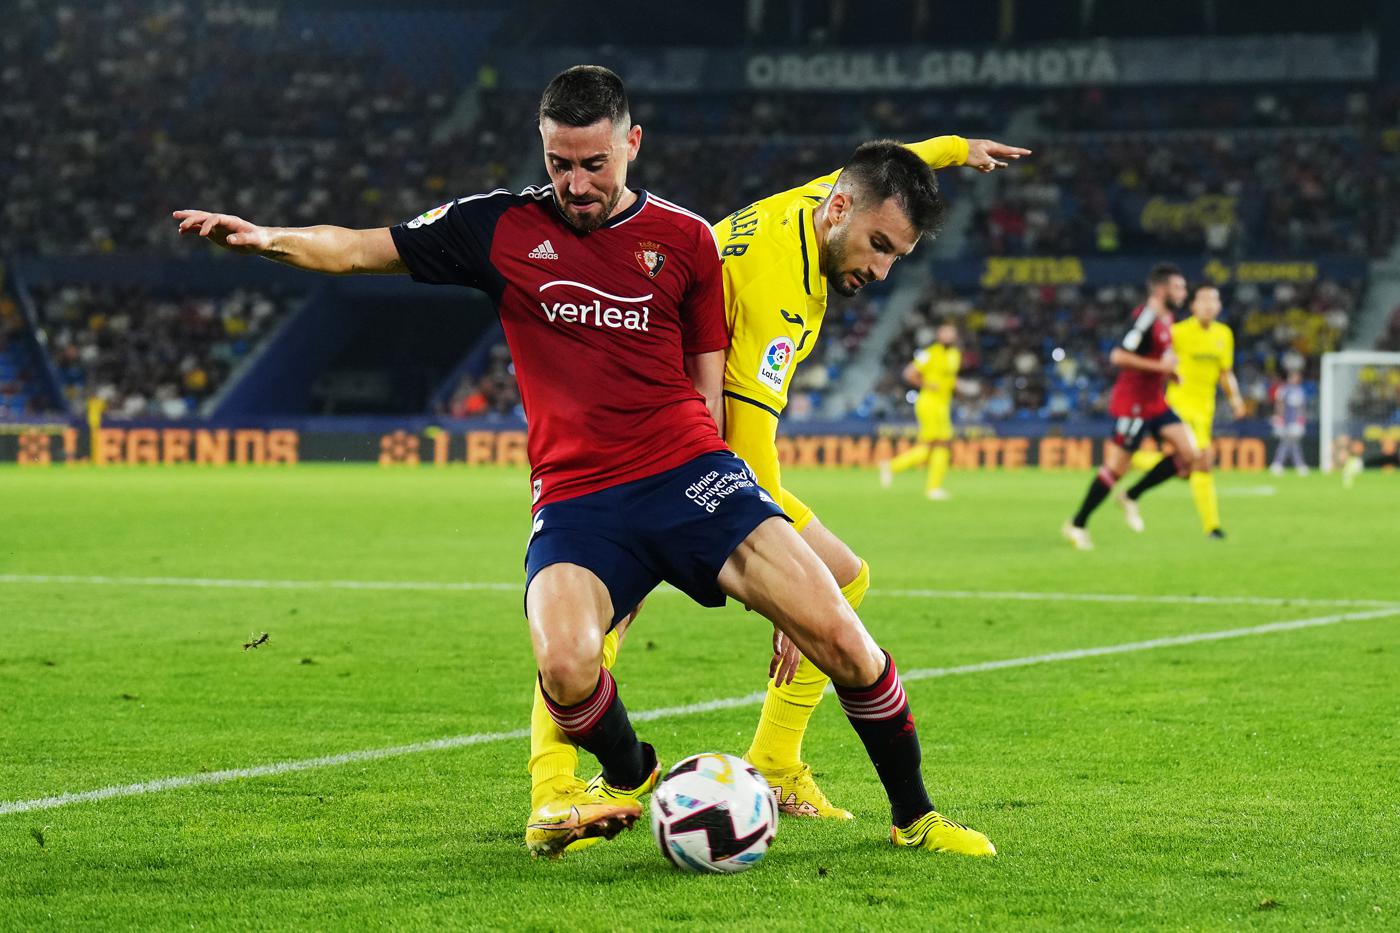 Osasuna - Villarreal - 0:3. Spain Championship, 26th round. Match review, statistics.